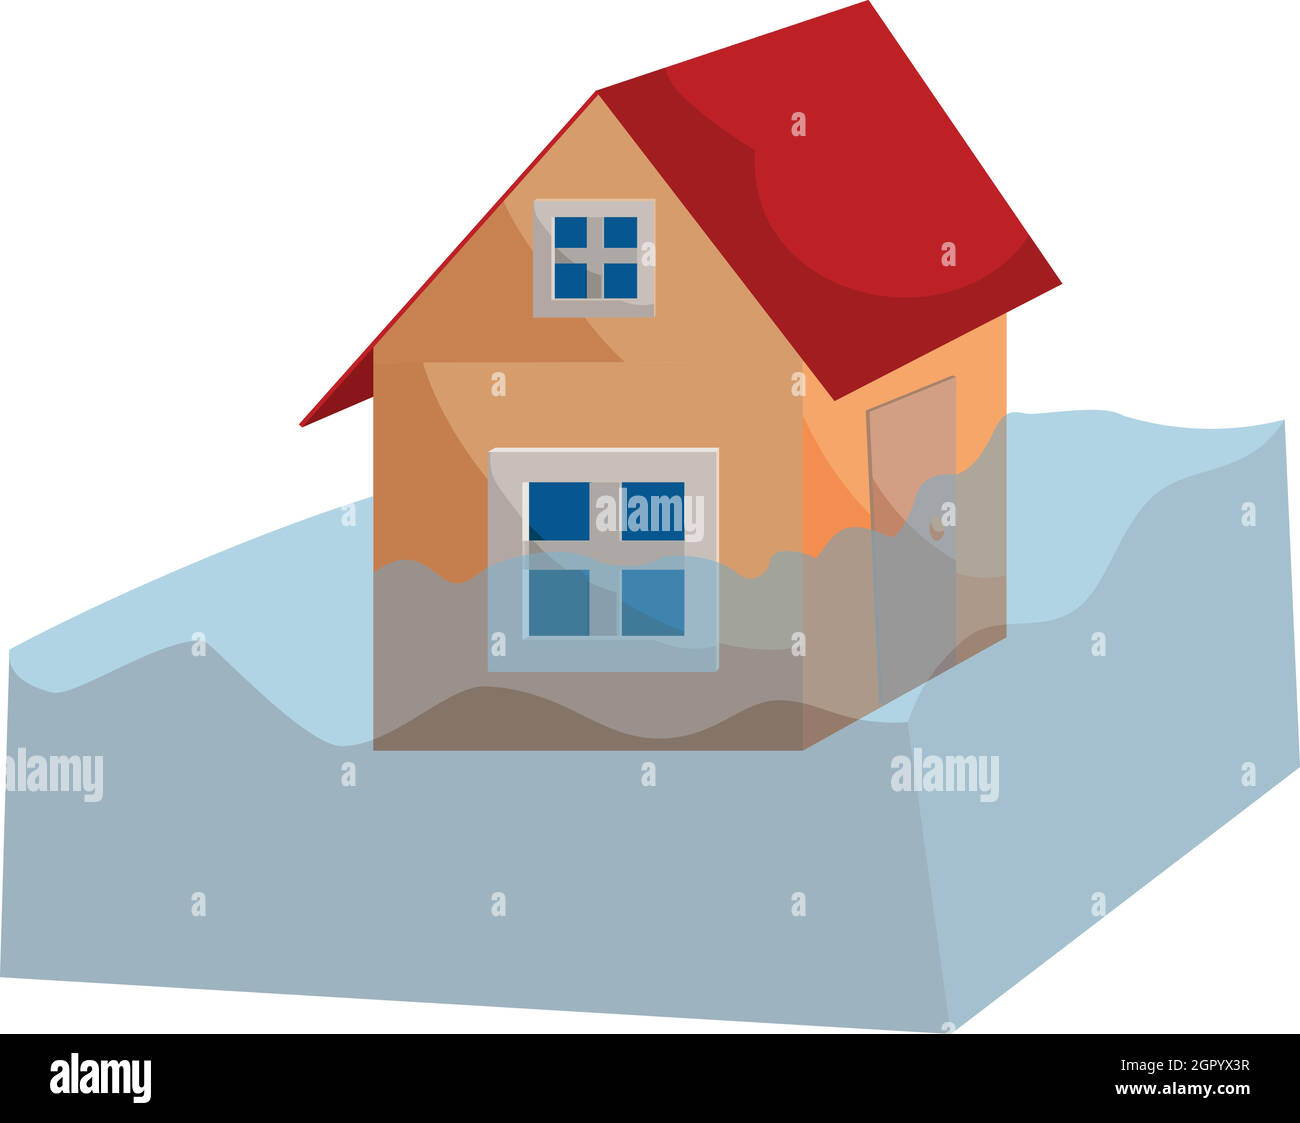 Flood insurance icon, cartoon style Stock Vector